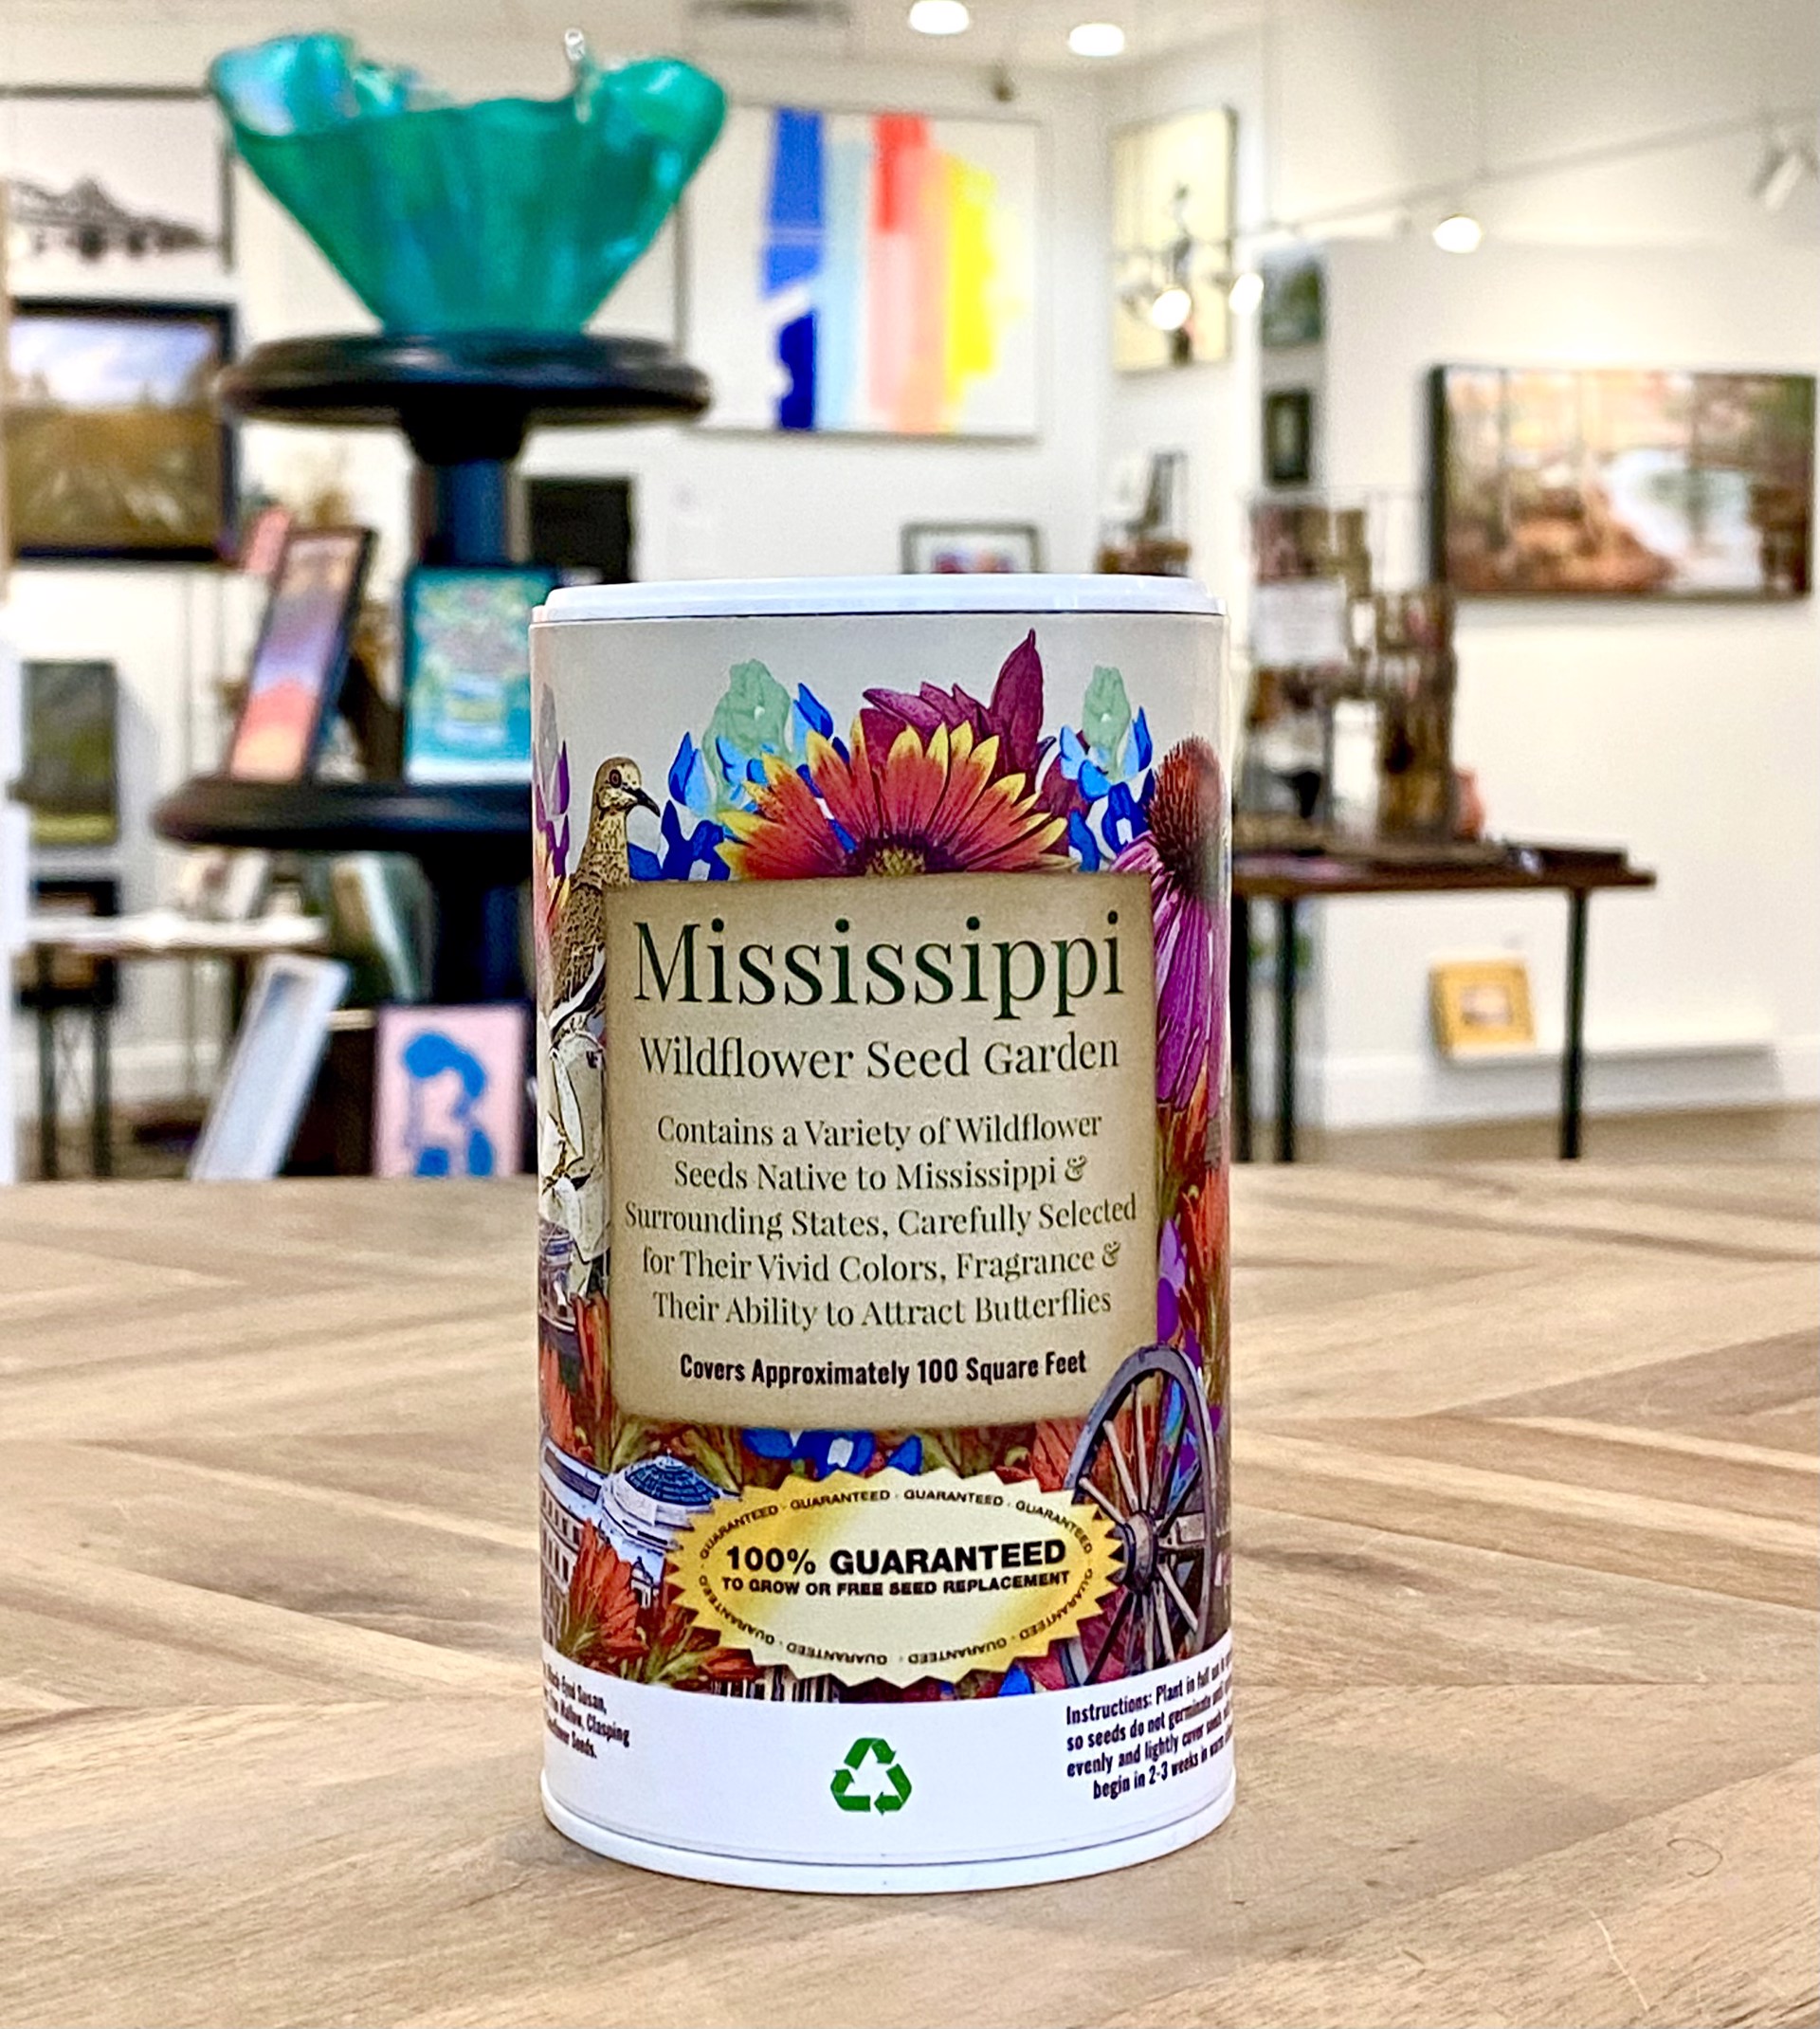 Mississippi Wildflower Seed Shaker Garden by Pacesetter Merchandise